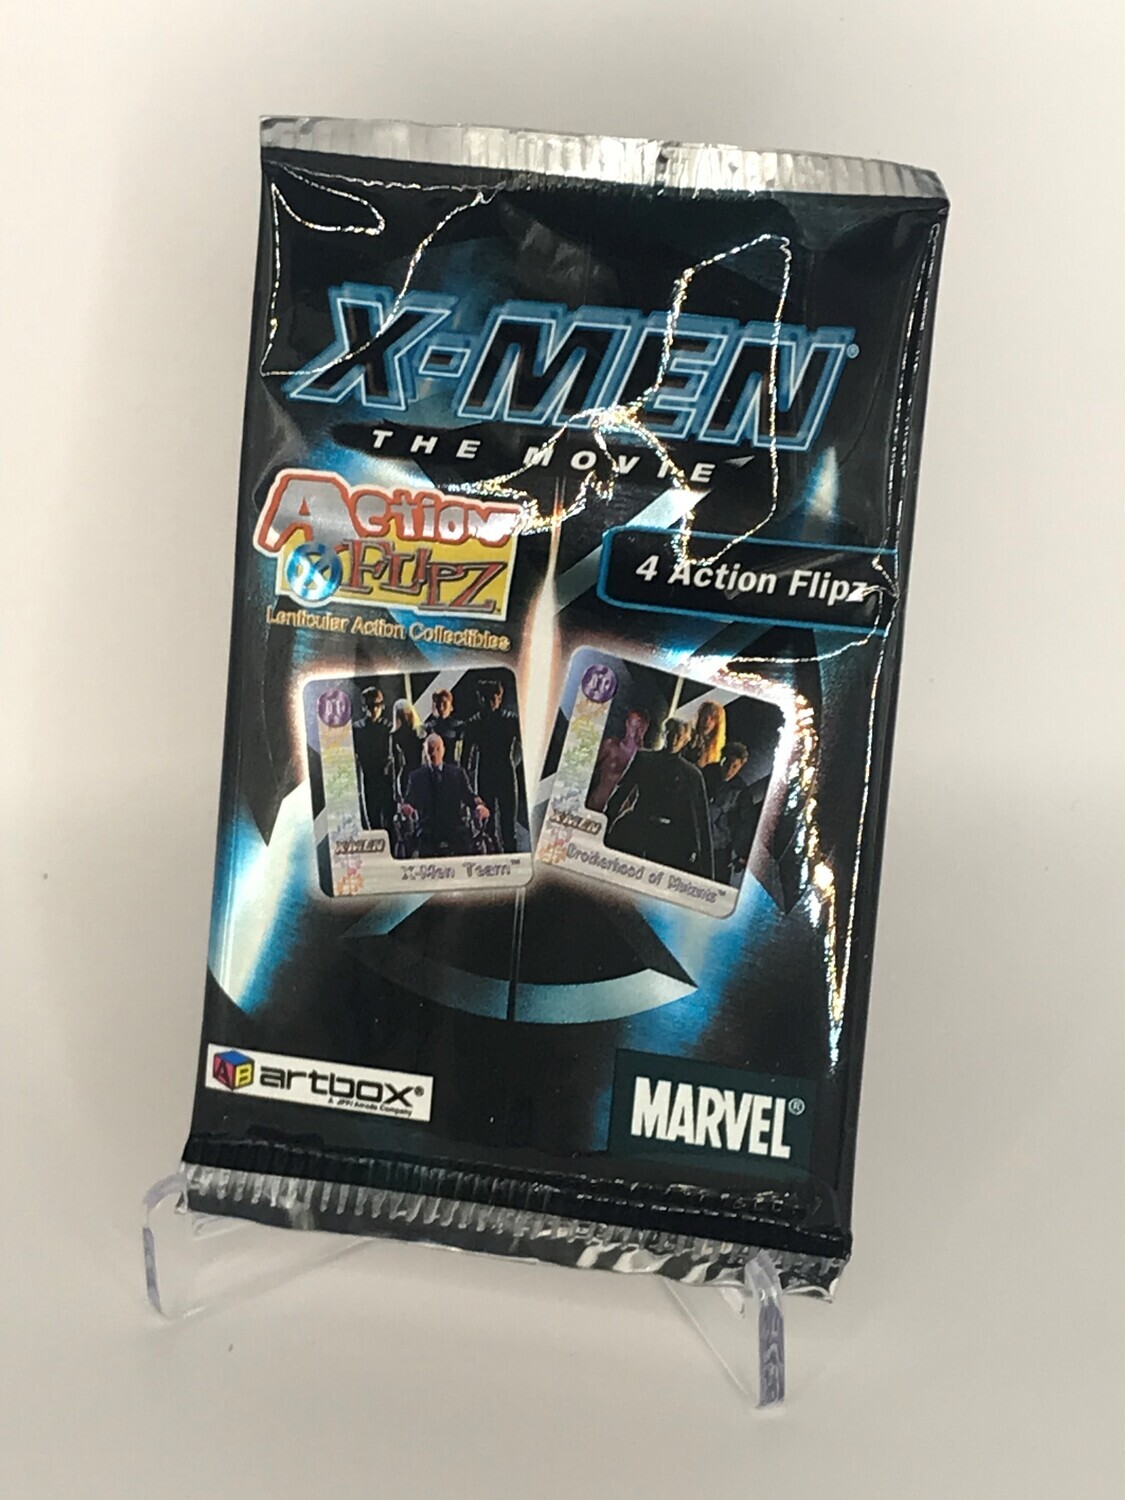 2000 Action Flipz X-Men the Movie - Pack